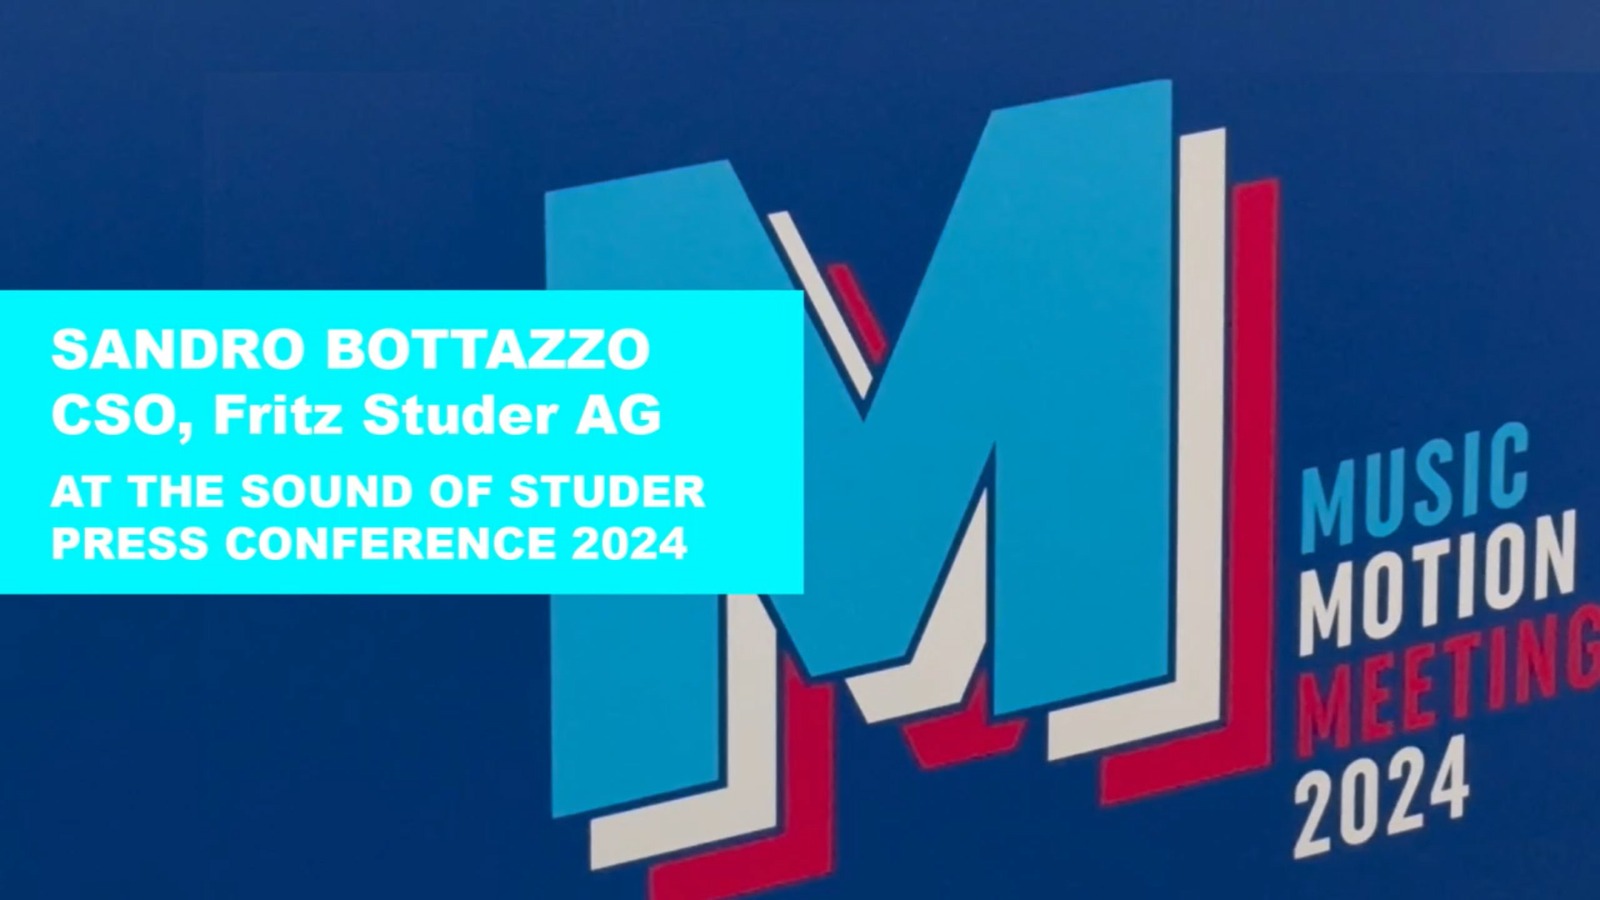 Sandro Bottazzo, CSO, Fritz Studer AG at the sound of studer Press Conference 2024